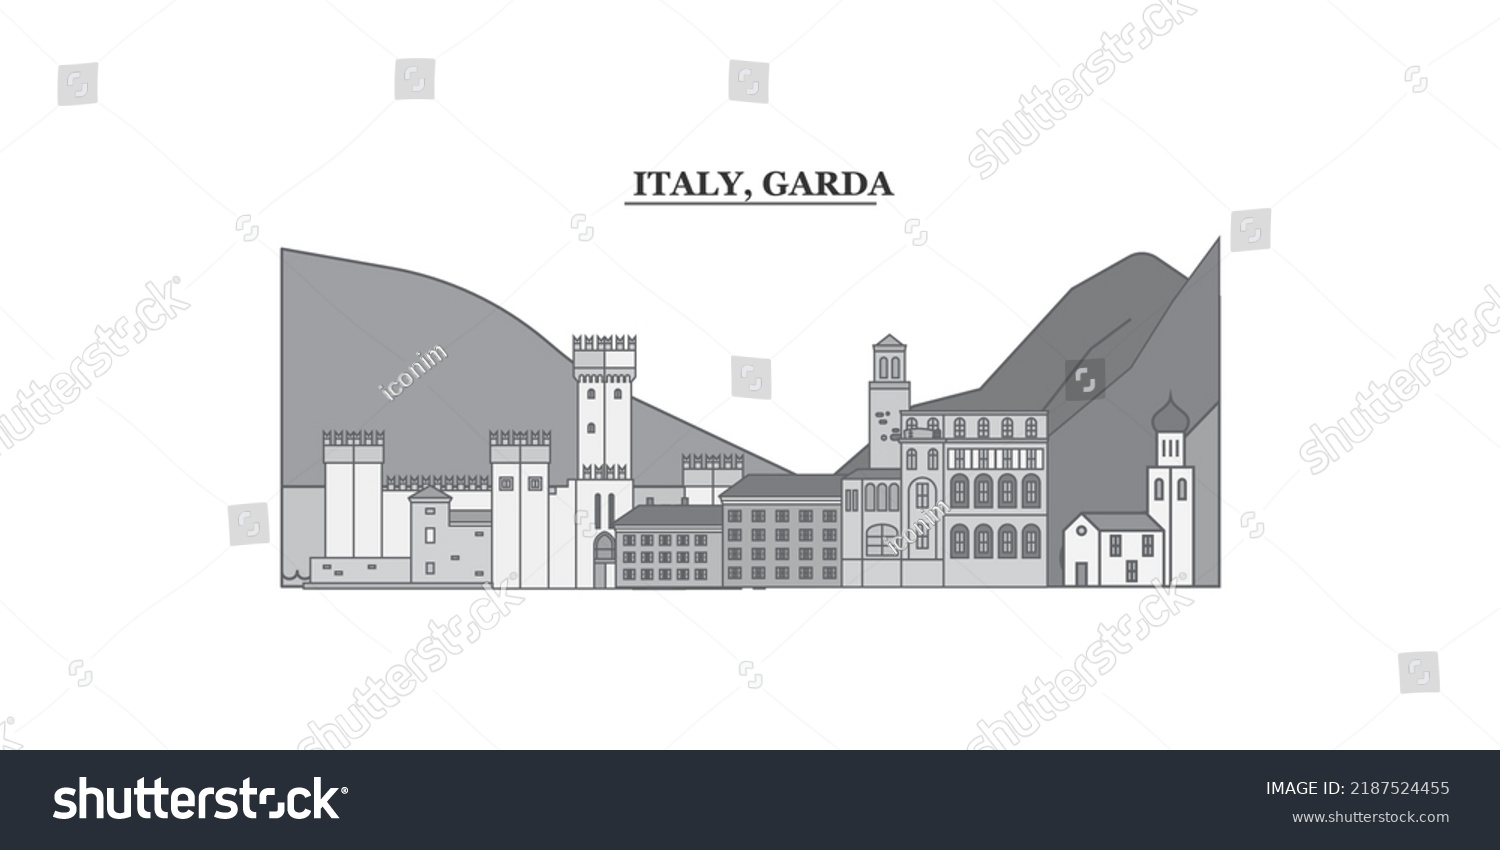 SVG of Italy, Garda city skyline isolated vector illustration, icons svg